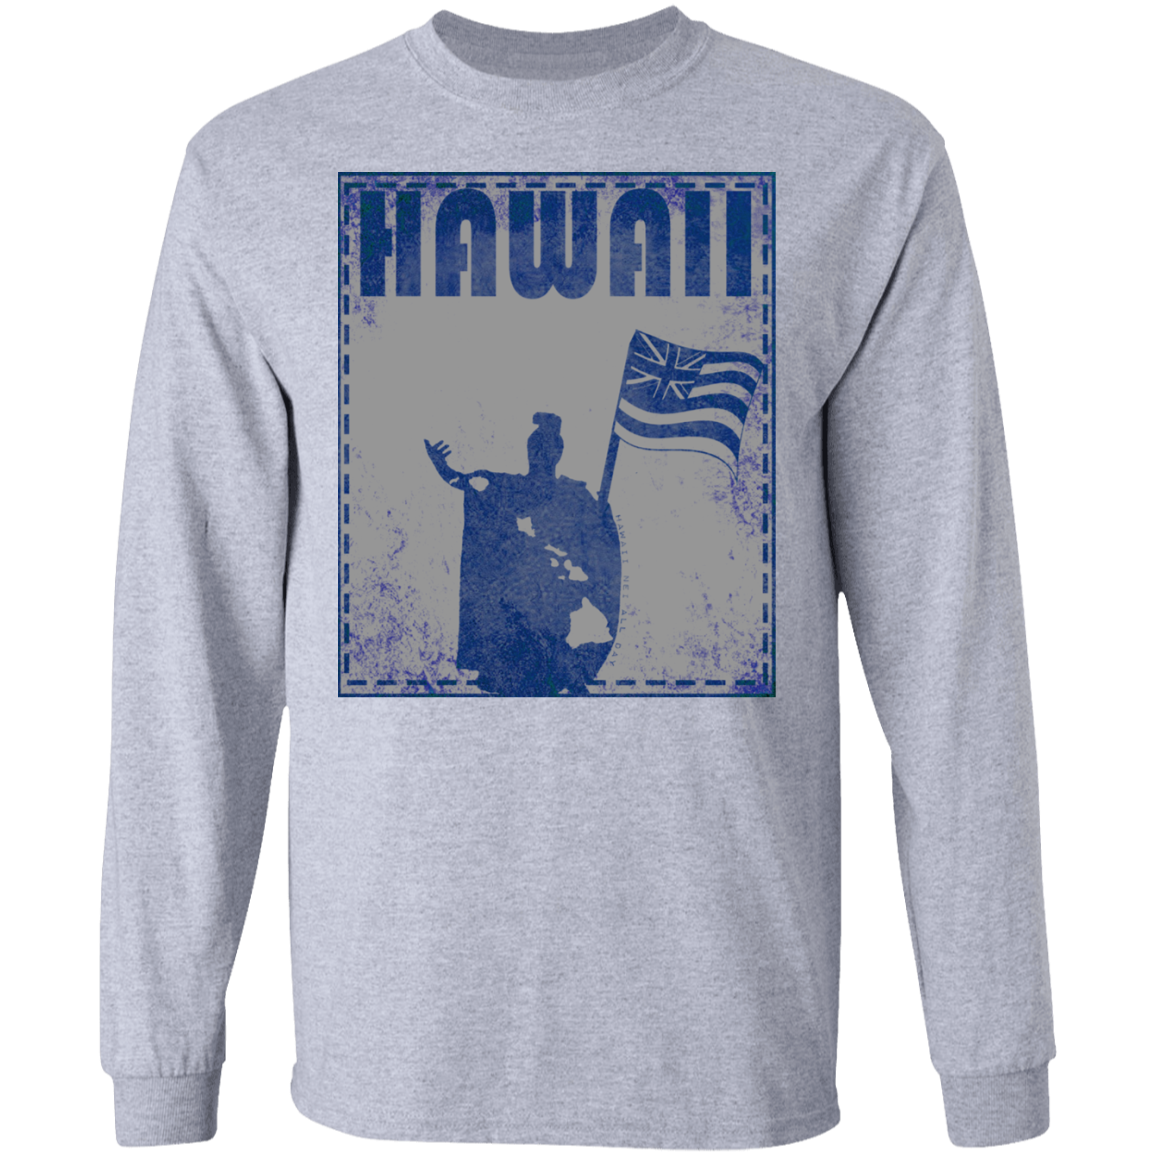 Hawaii Unified (blue) LS T-Shirt